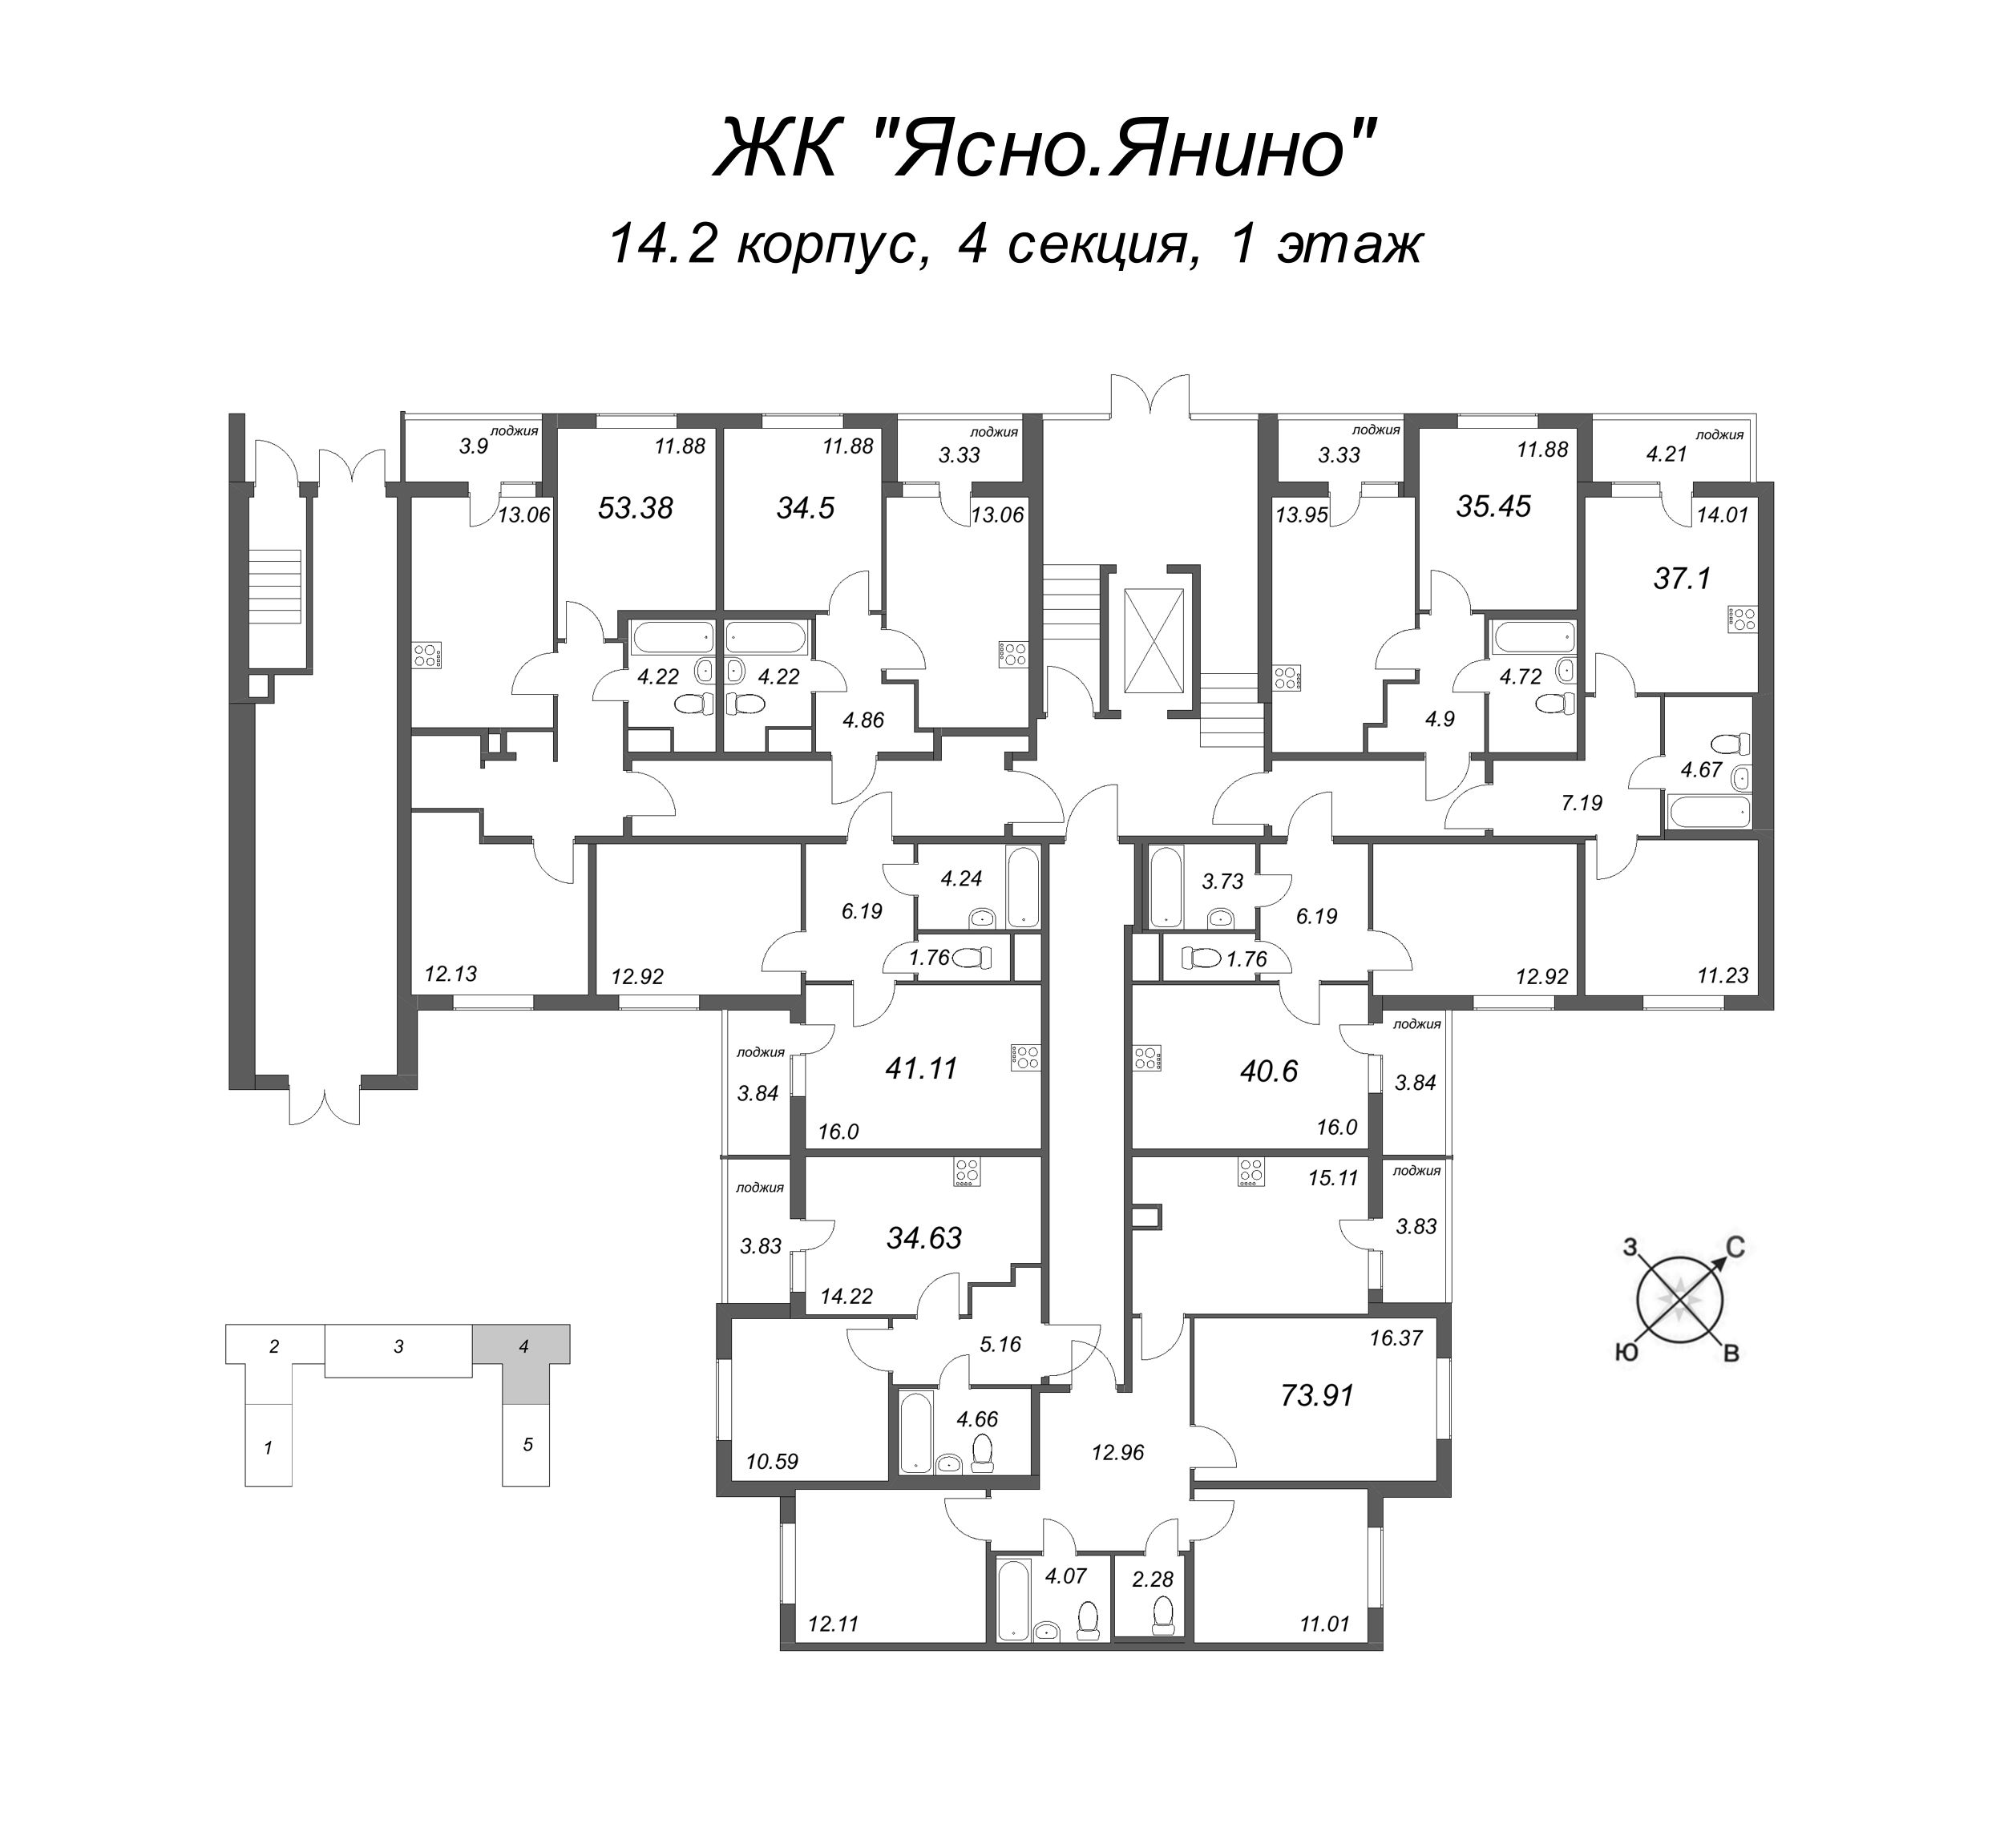 1-комнатная квартира, 35.45 м² в ЖК "Ясно.Янино" - планировка этажа